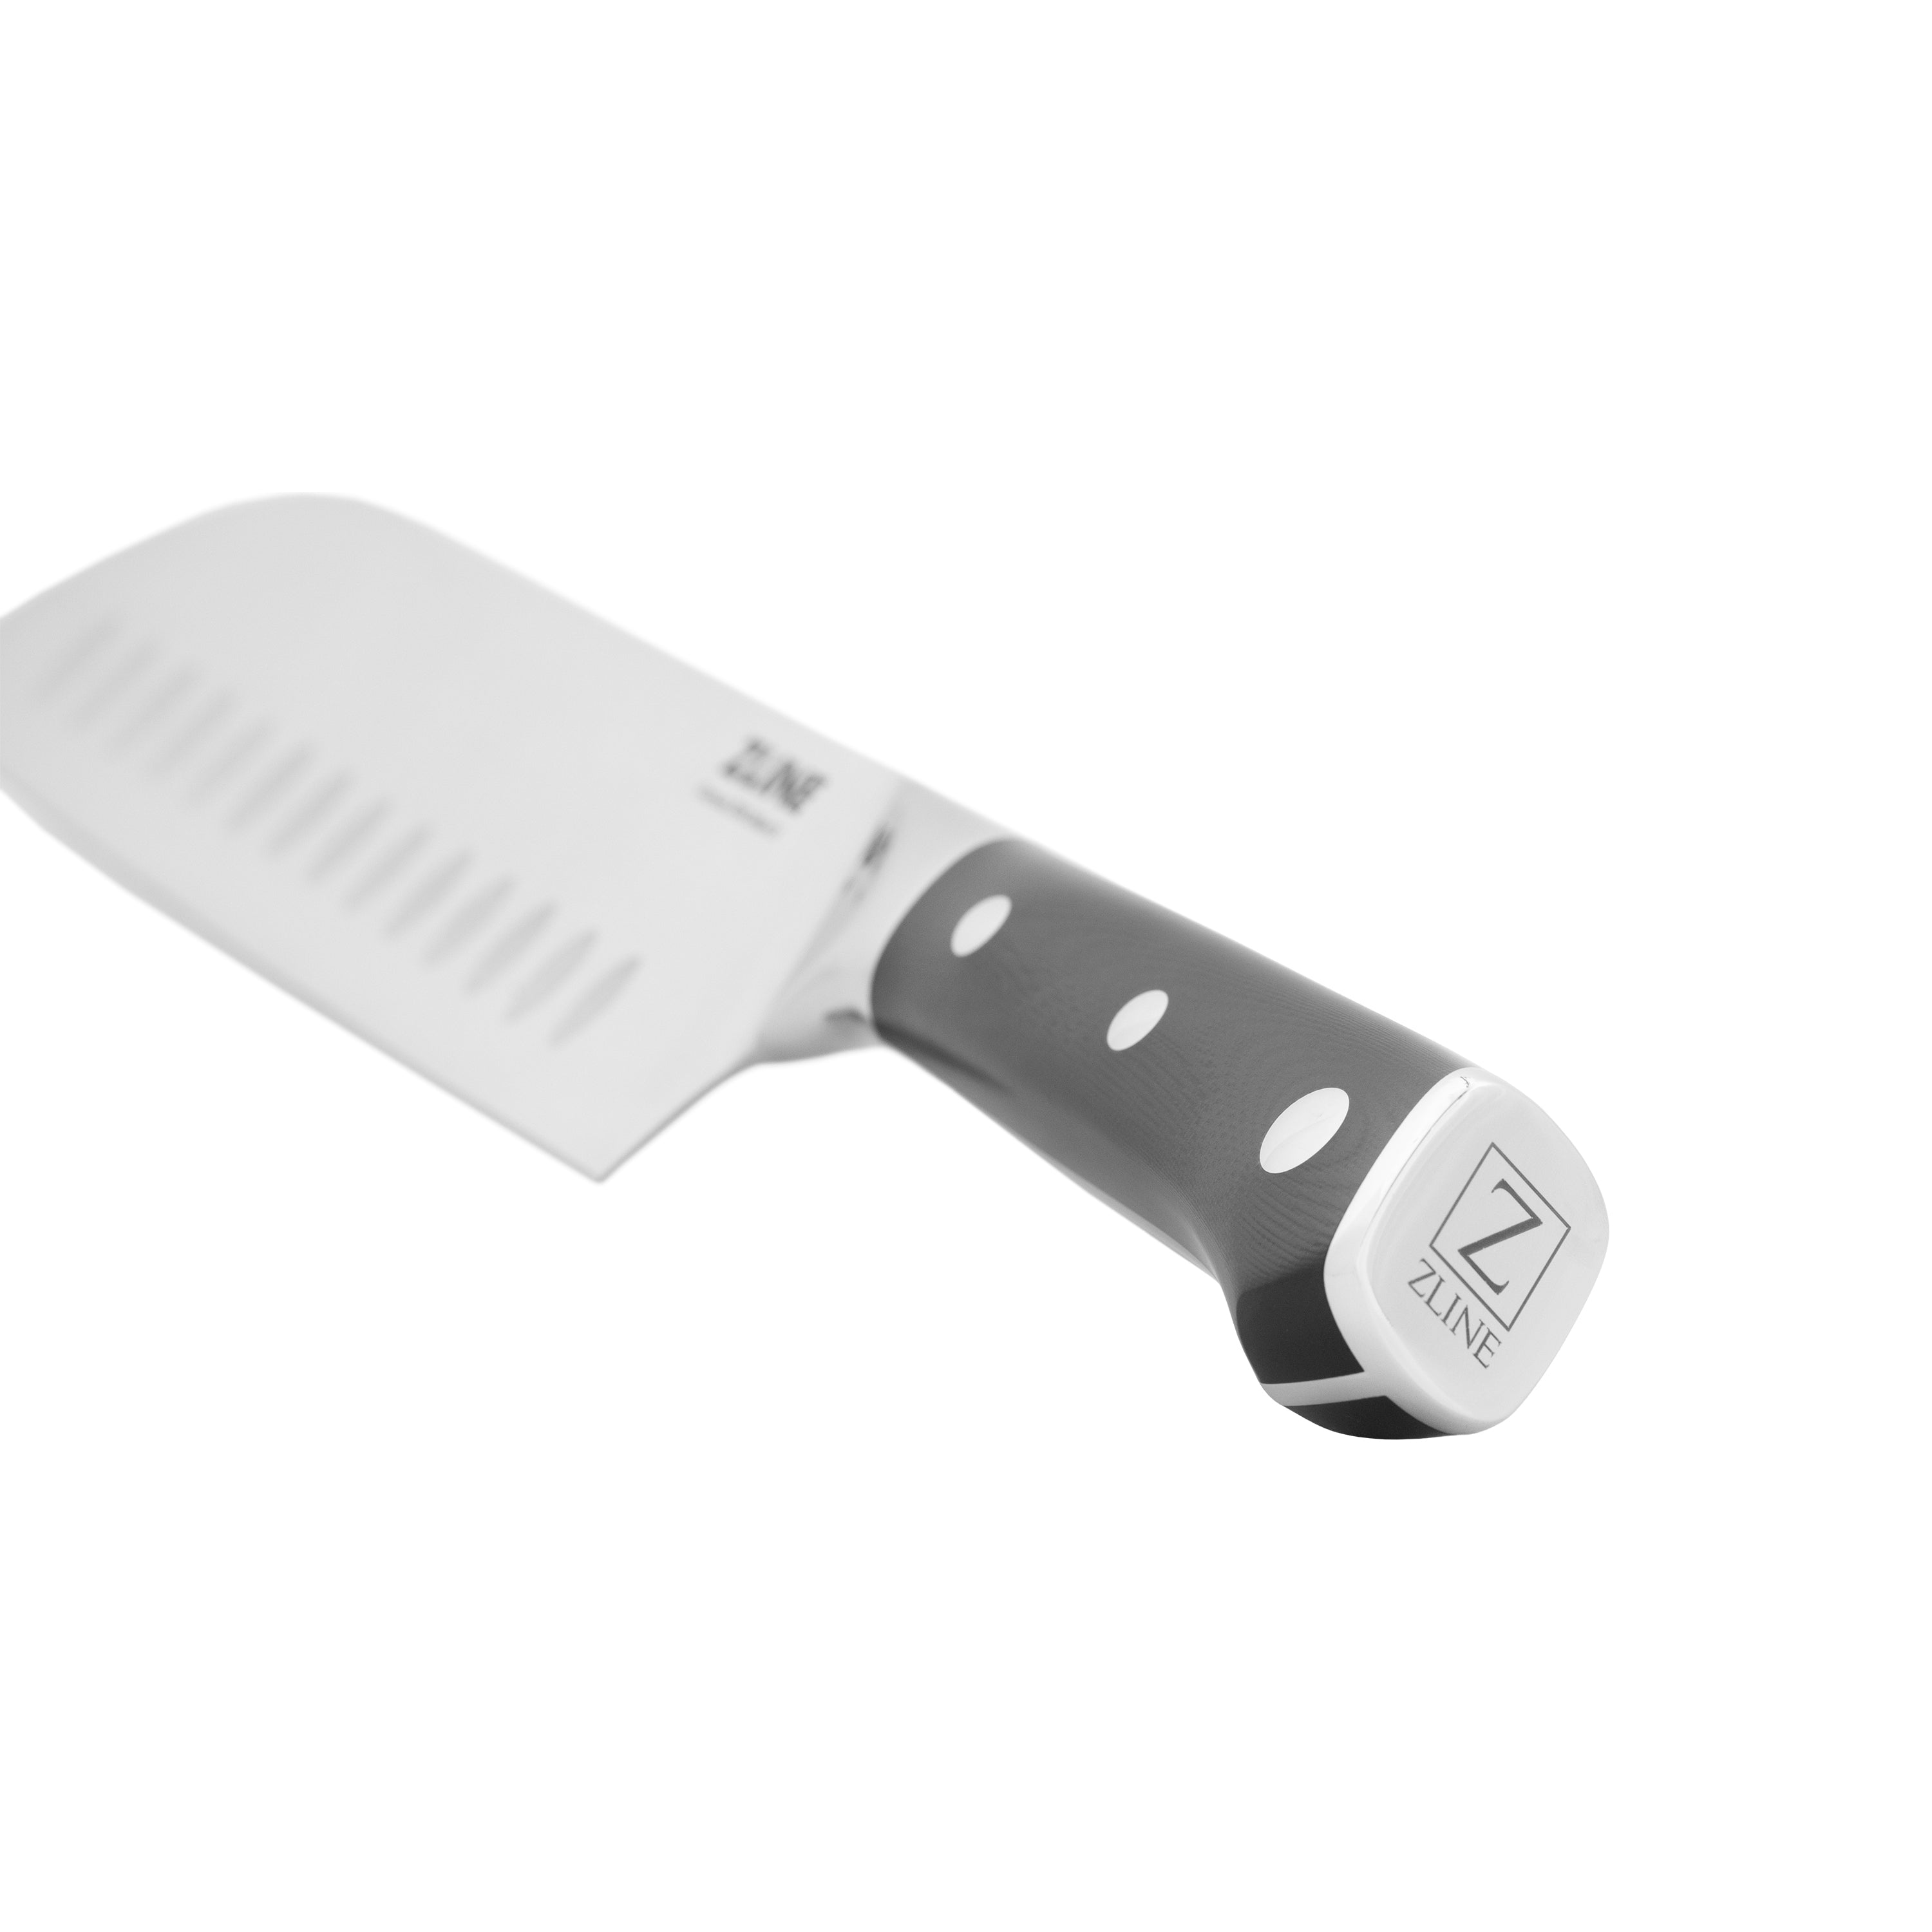 ZLINE 8” Professional German Steel Chef’s Knife